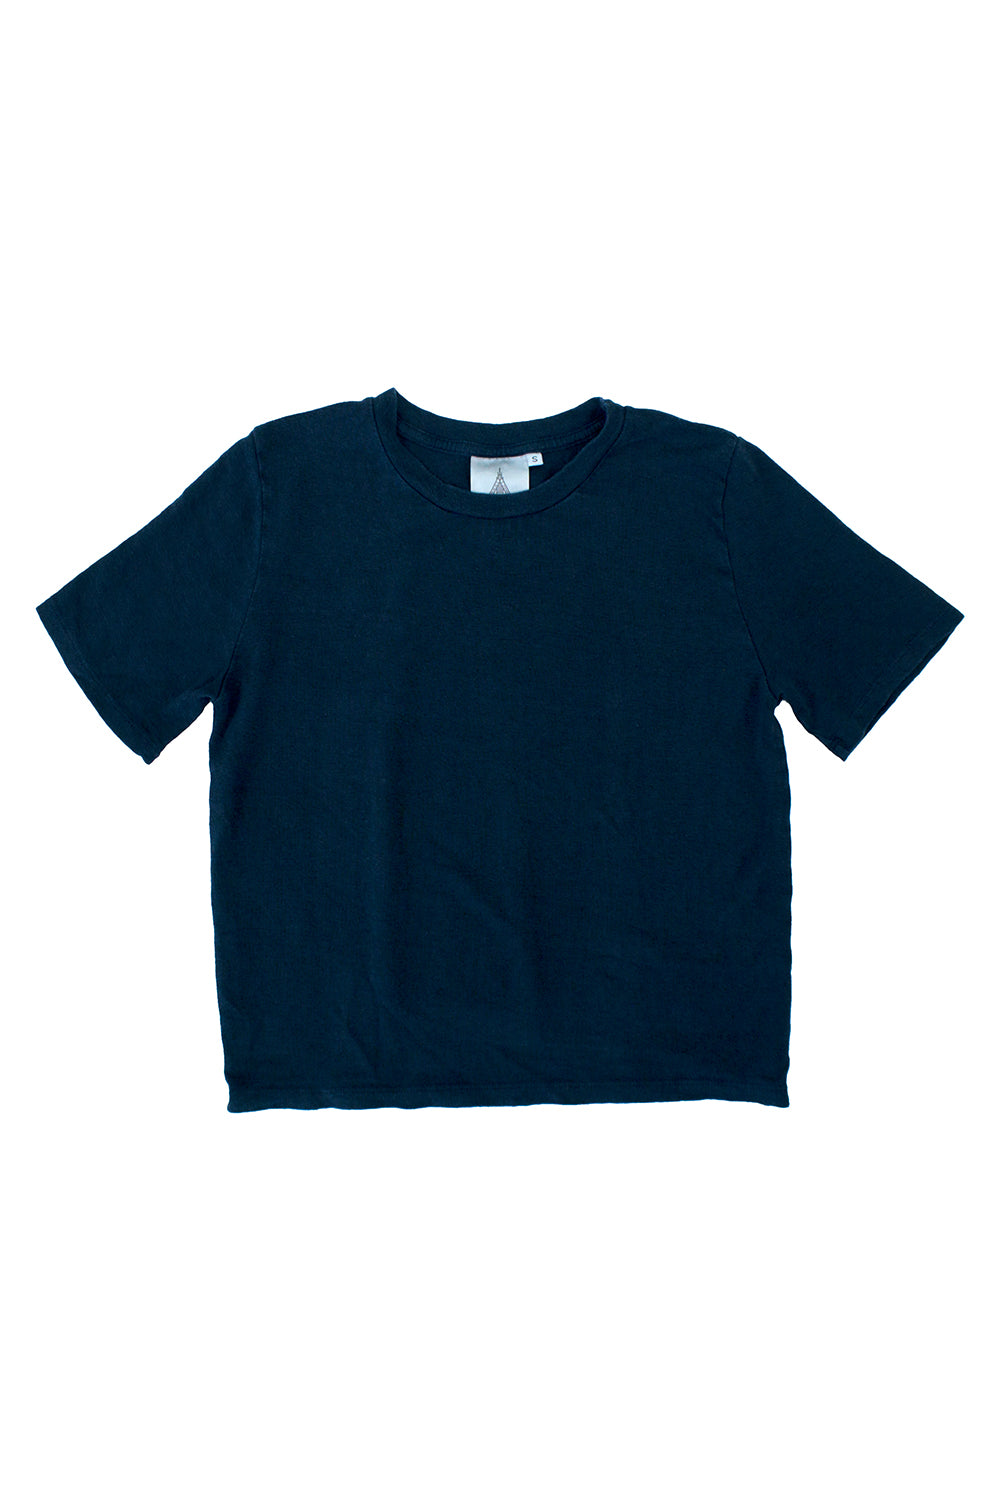 Dakota - 100% Hemp Cropped Tee | Jungmaven Hemp Clothing & Accessories / Color: Navy